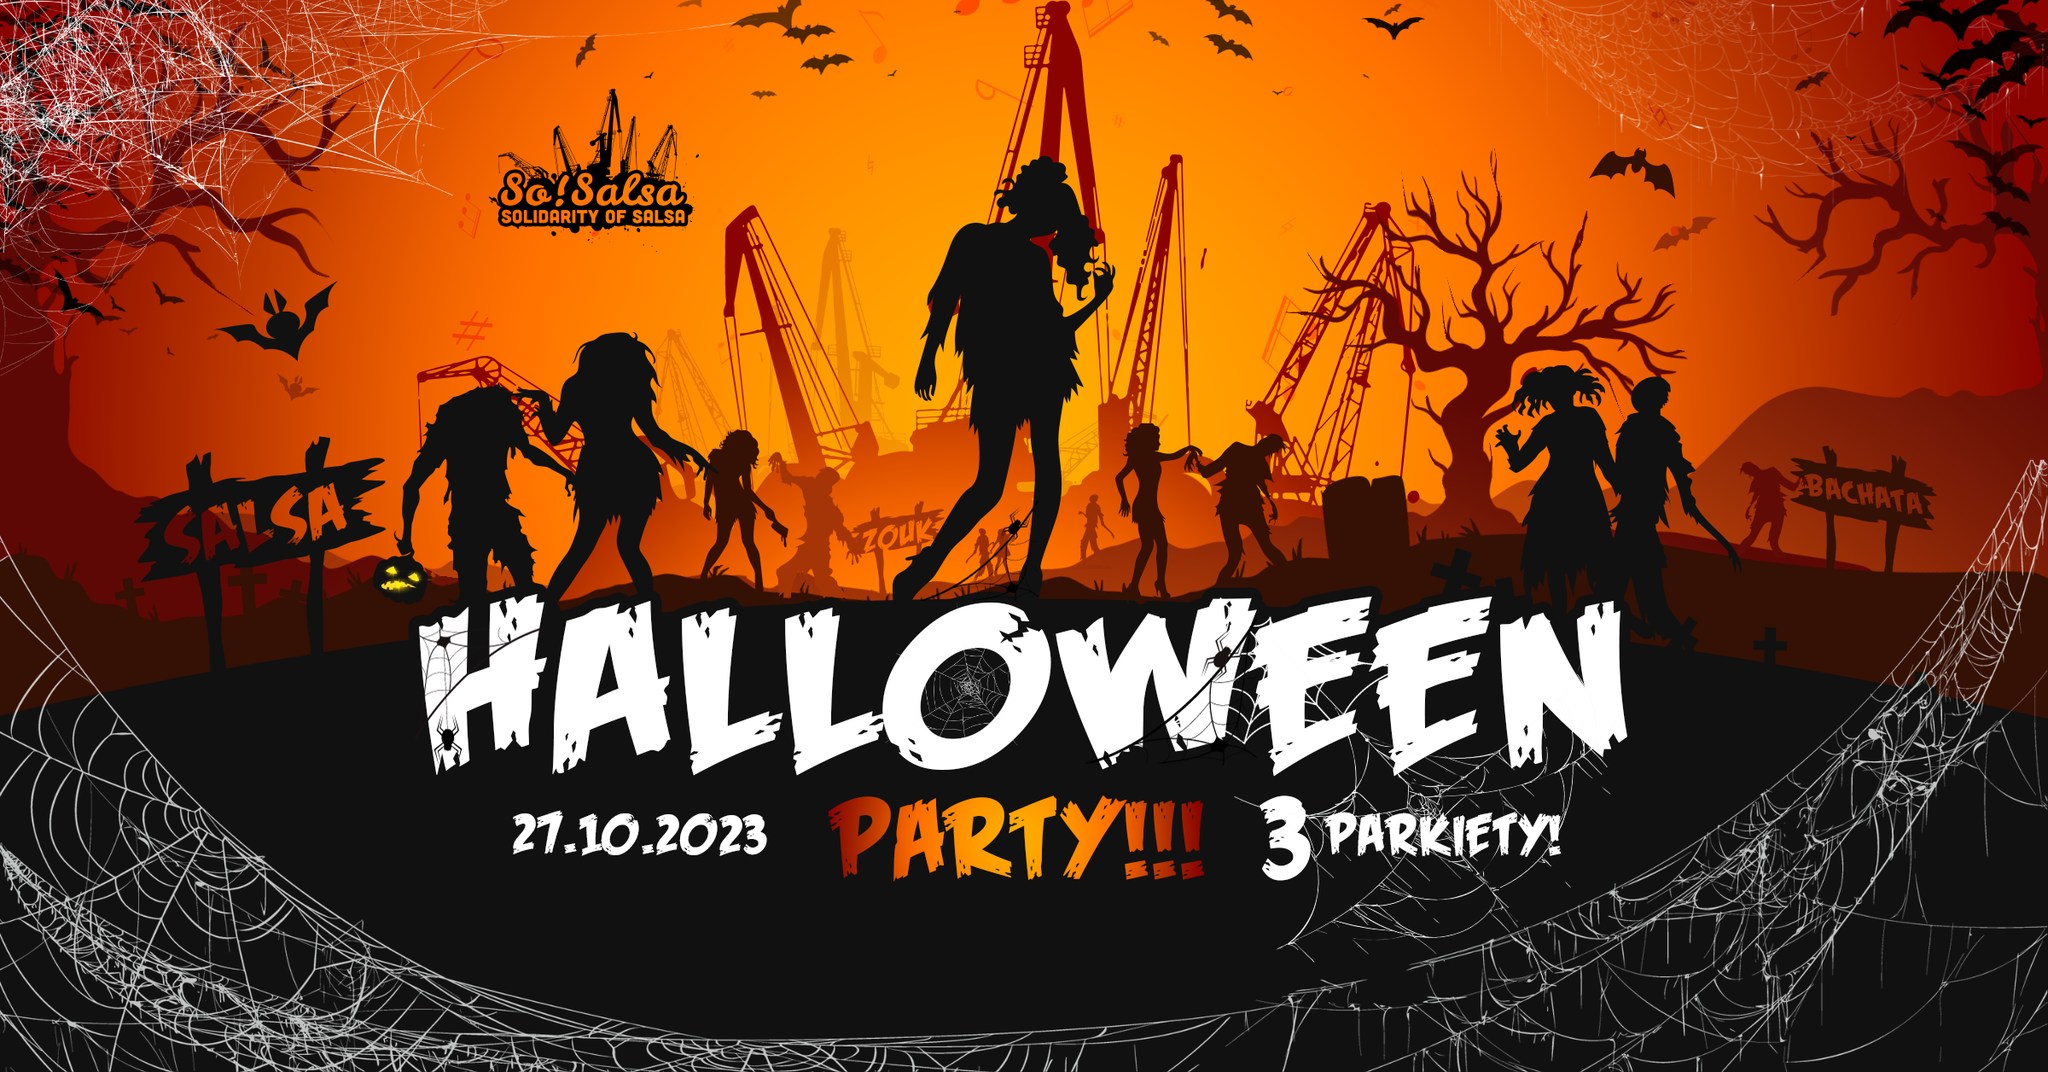 So! Halloween Party